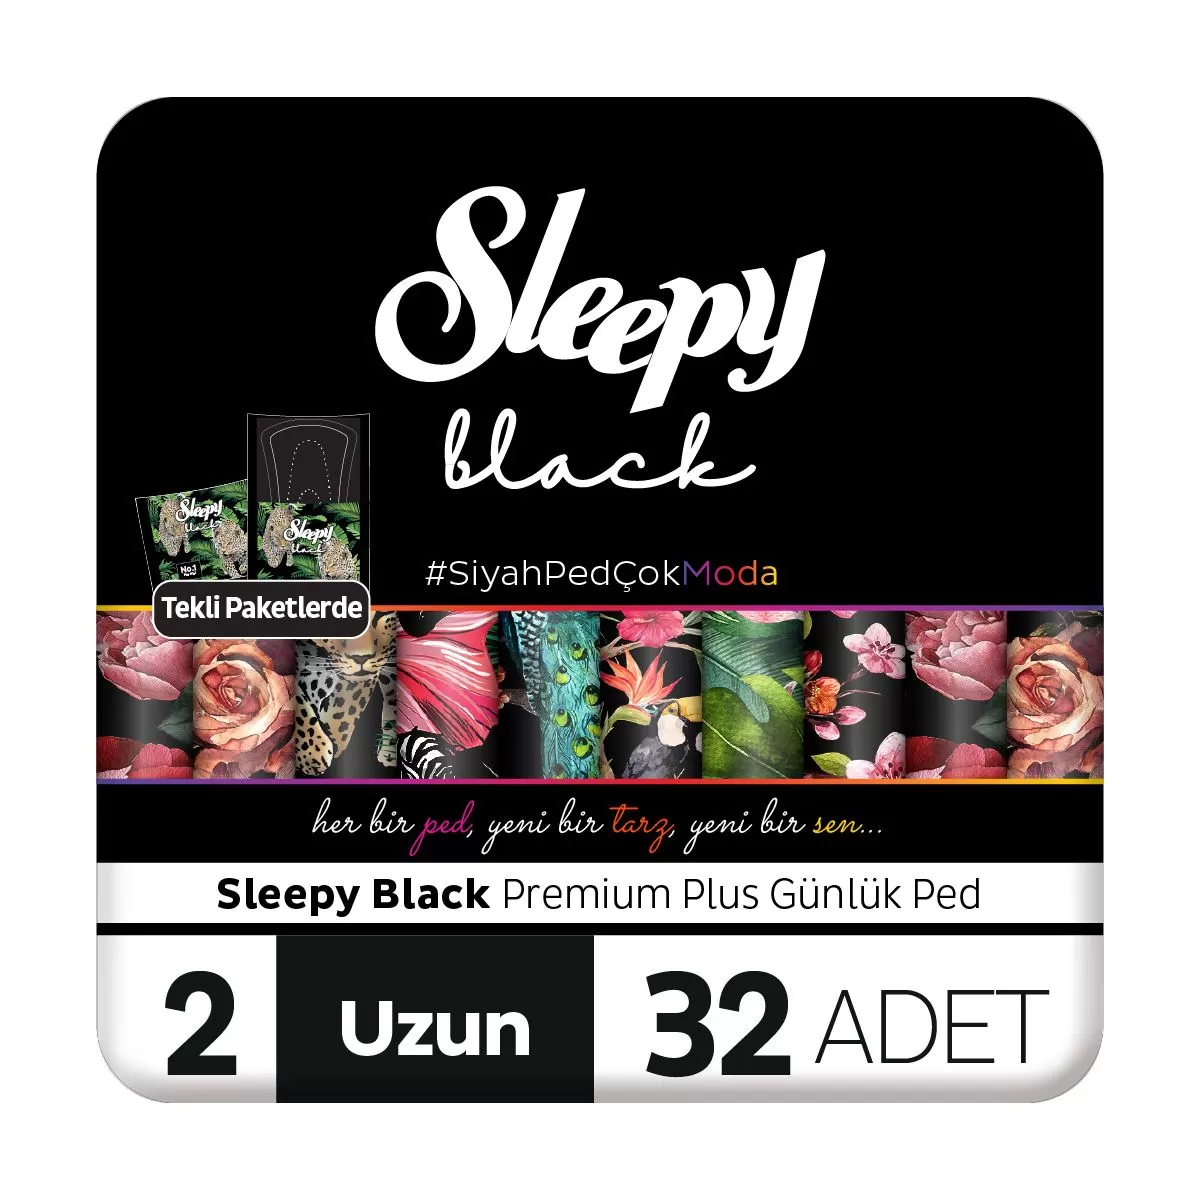 Sleepy Black Premium Plus Günlük Ped Uzun 32x6 192 Adet Ped